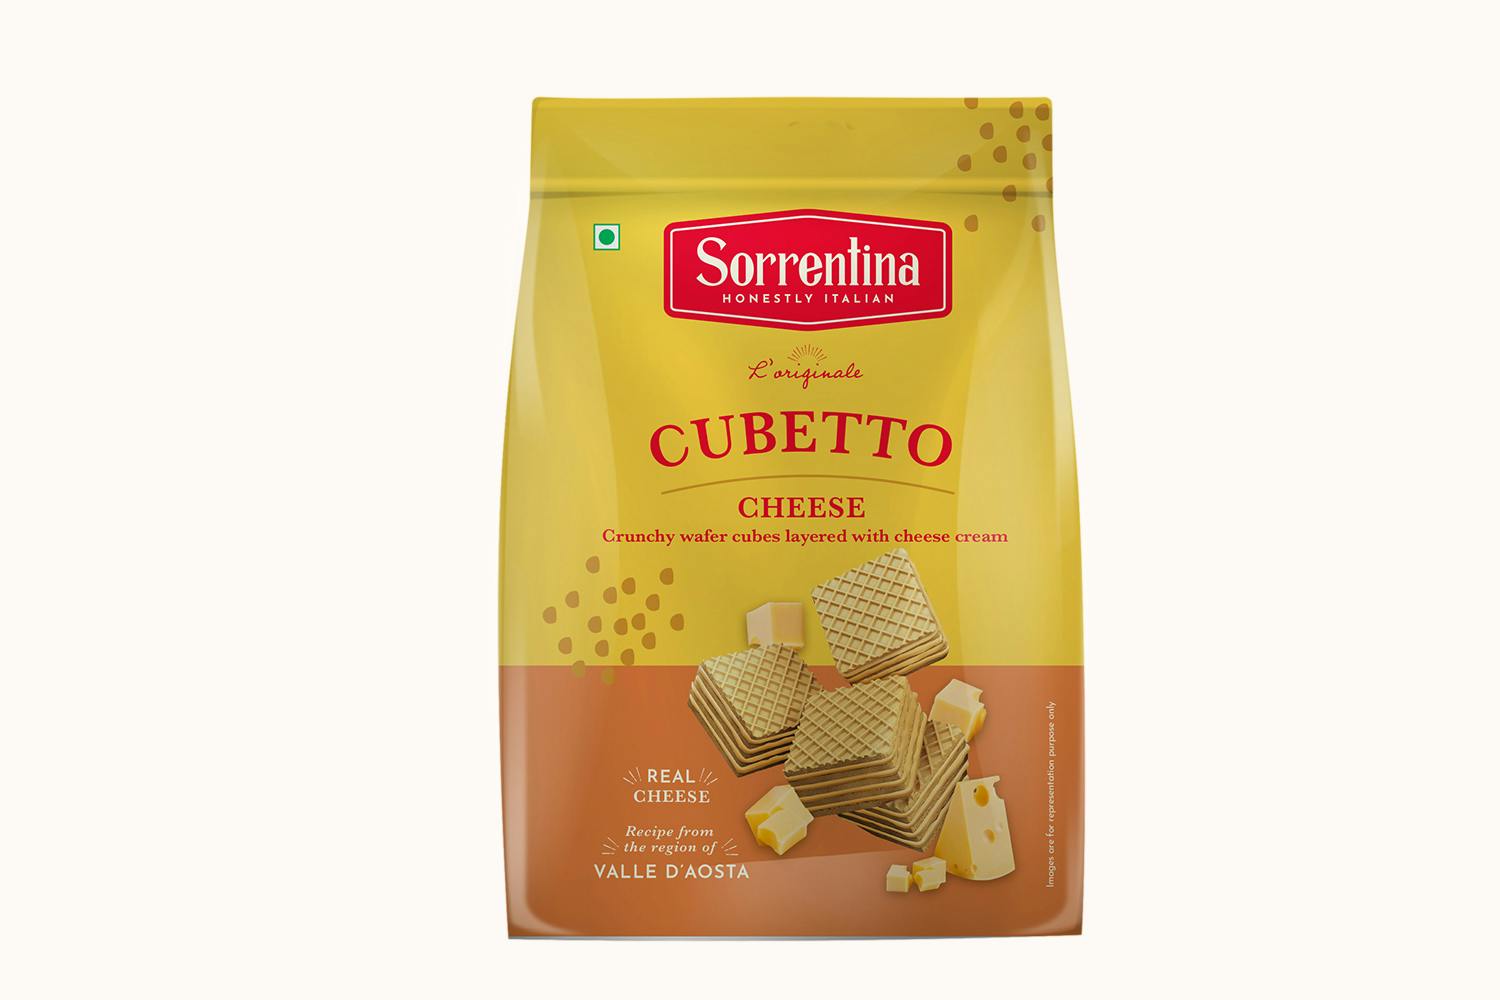 Sorrentina Cubetto Cheese